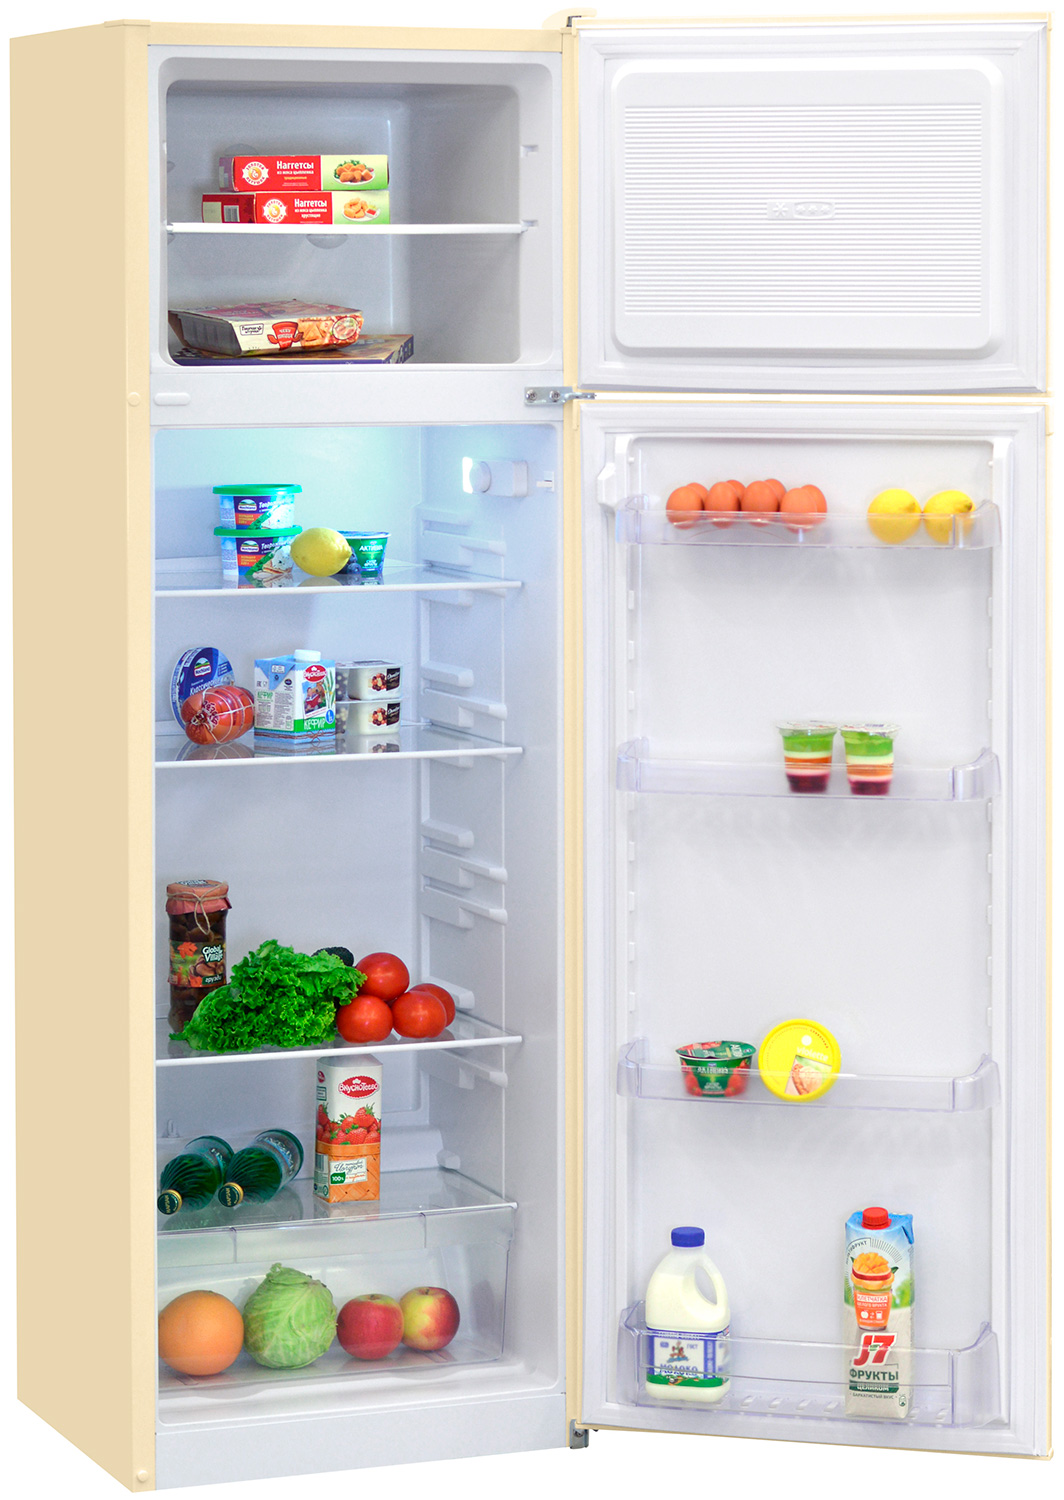 Двухкамерный холодильник NordFrost NRT 144 732 бежевый холодильник lg gn b422secl бежевый двухкамерный